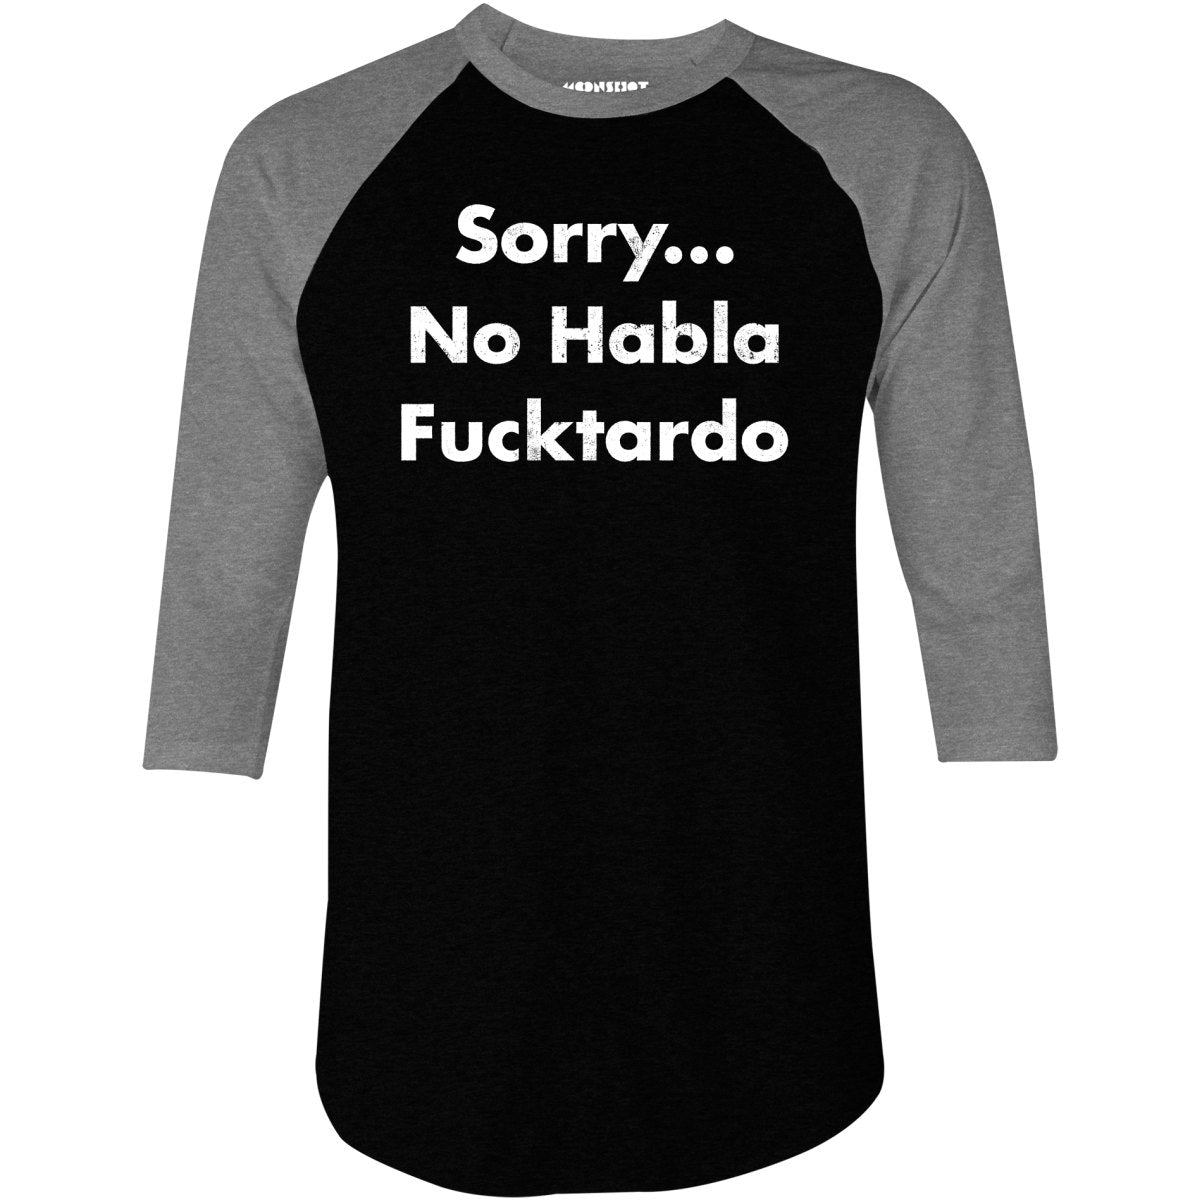 Sorry... No Habla Fucktardo - 3/4 Sleeve Raglan T-Shirt